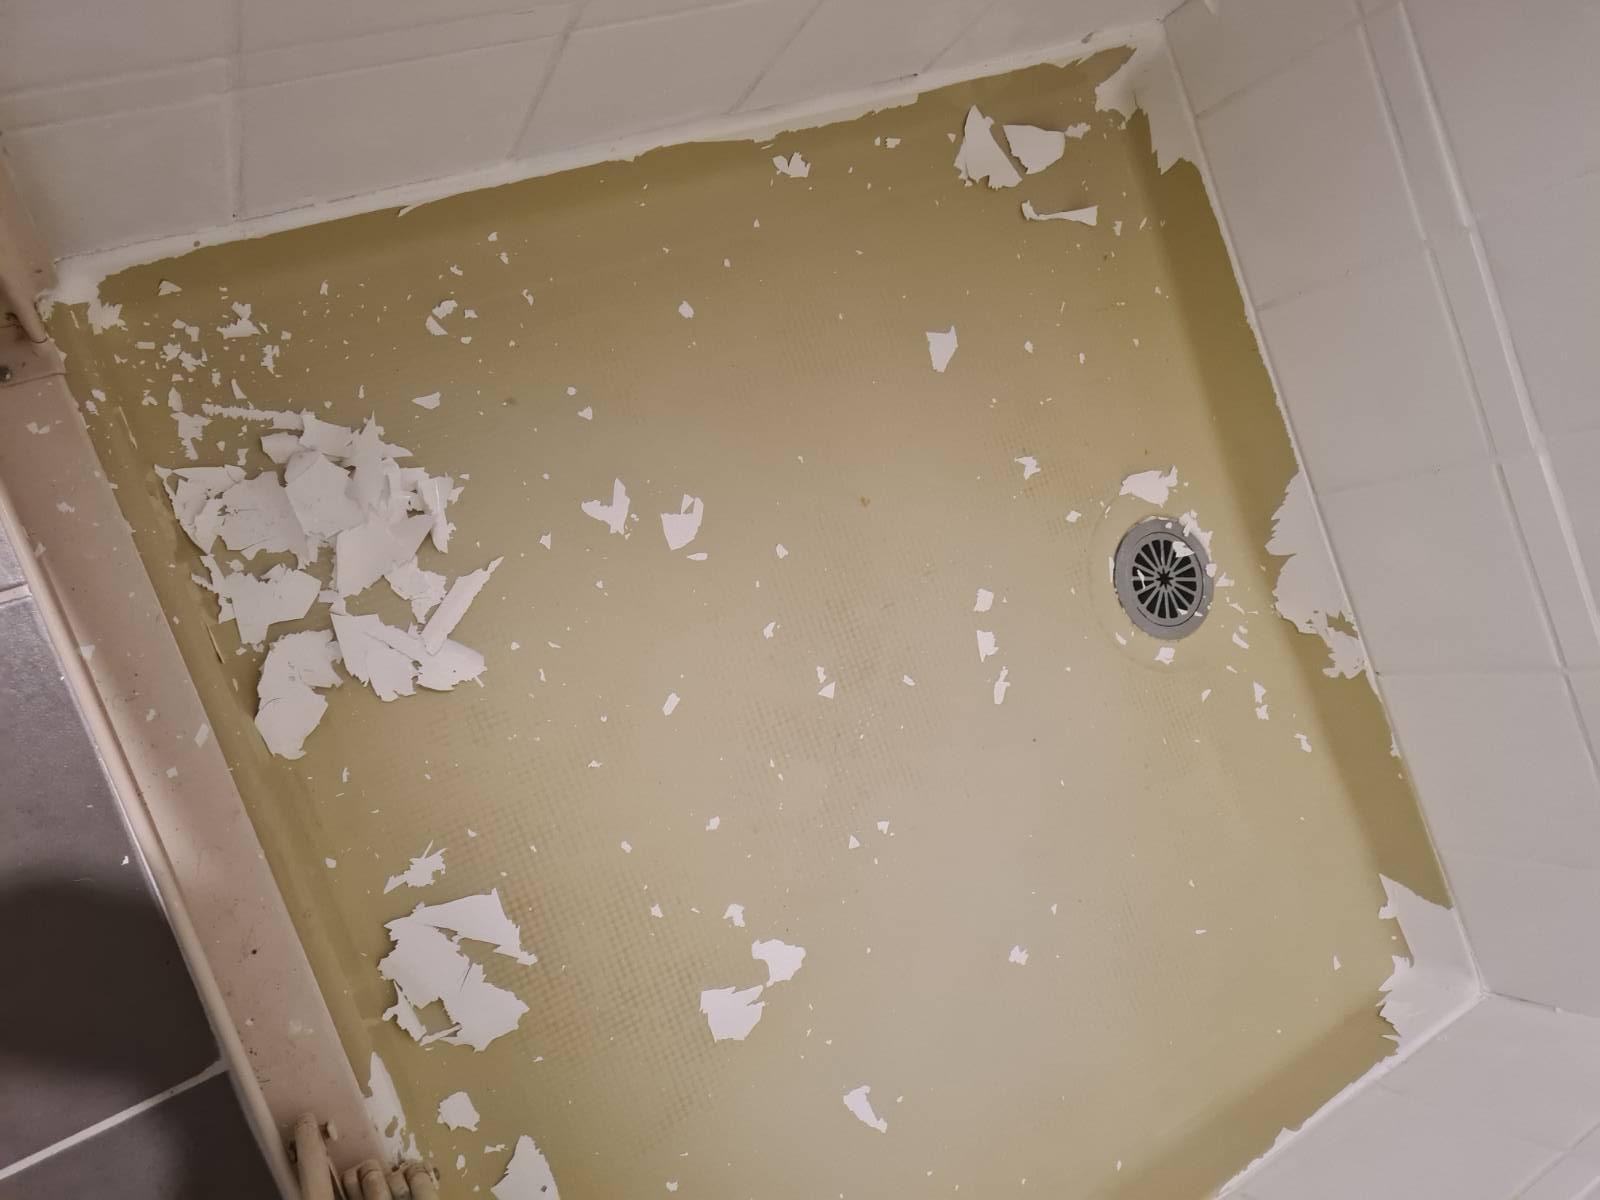 Shower basin floor peeling